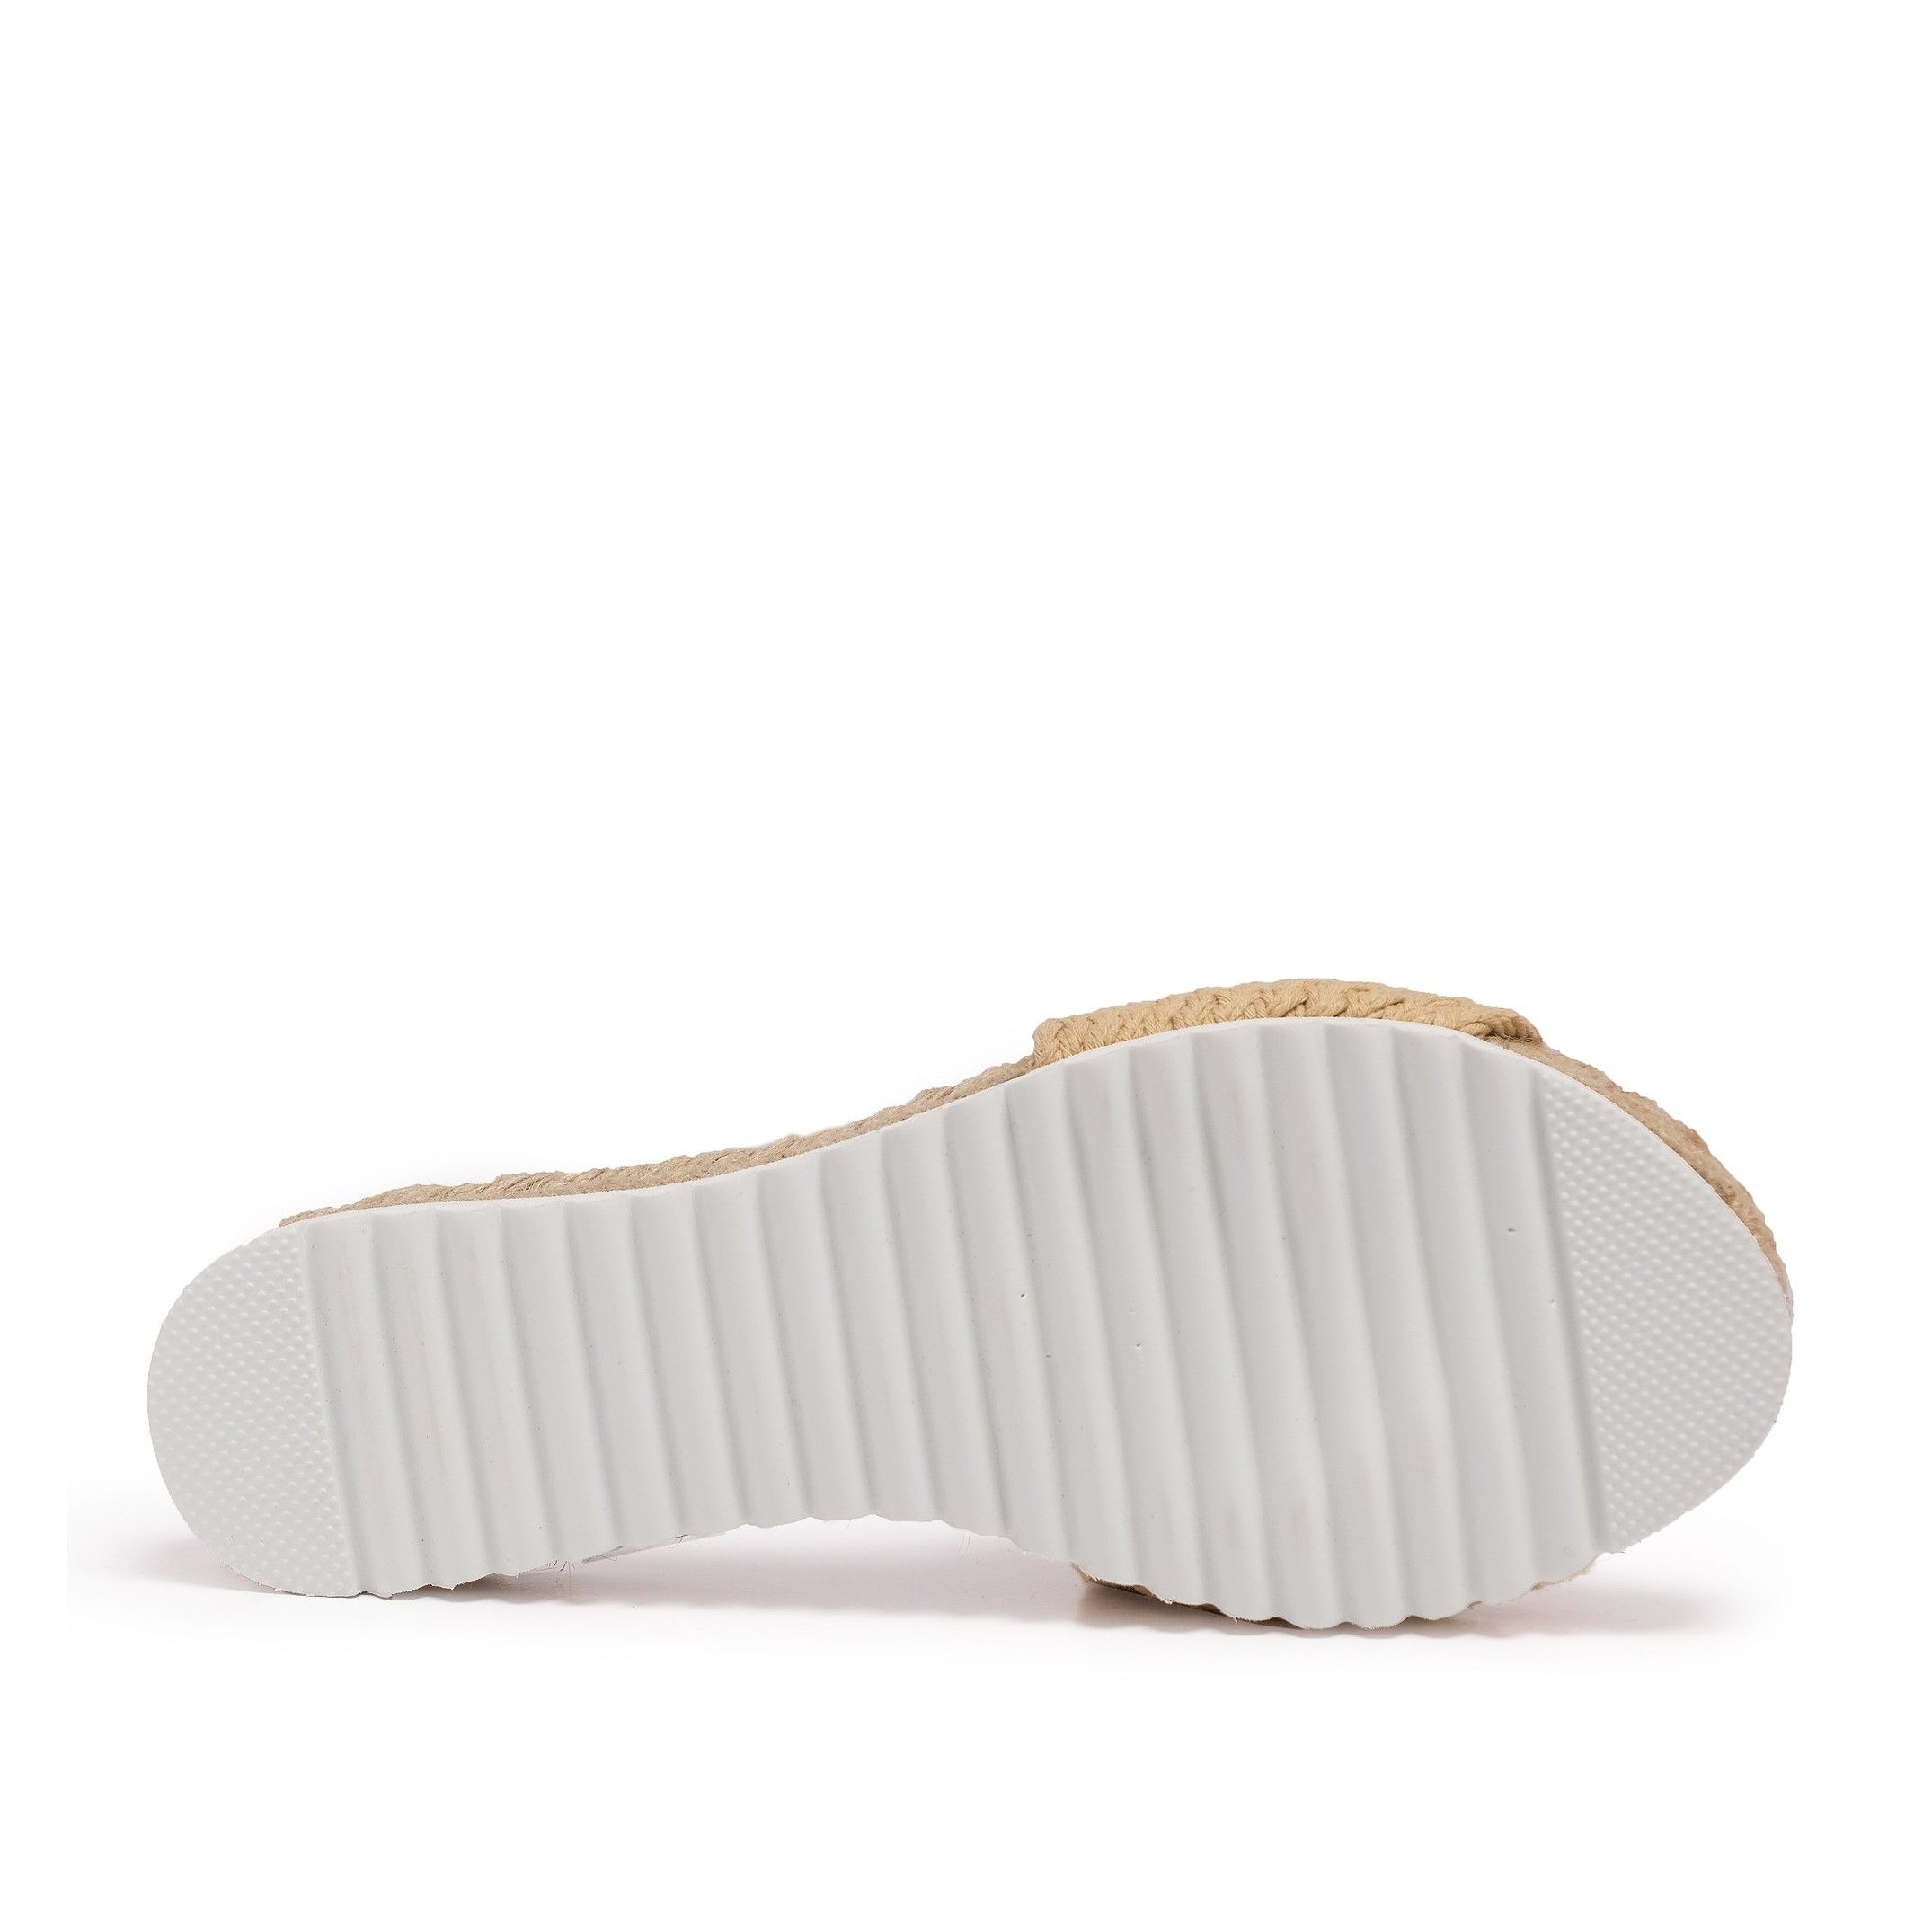 Flat Yute sandal for Women Camel Shoes. Eva Lopez